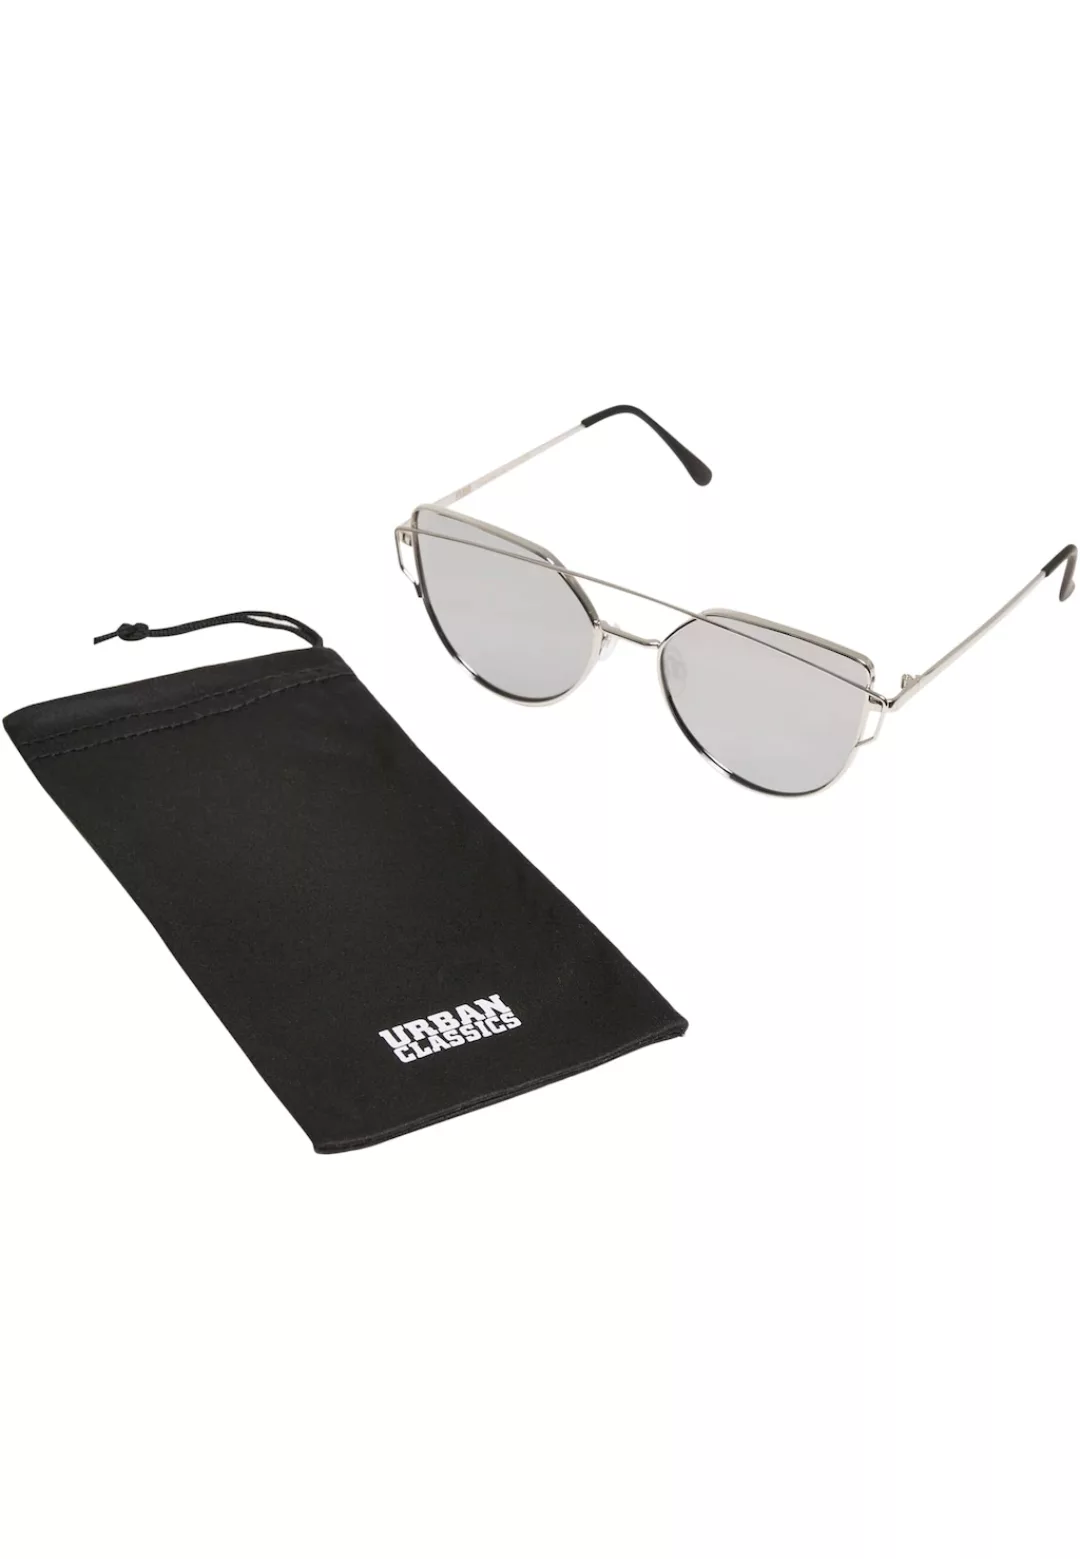 URBAN CLASSICS Sonnenbrille "Accessoires Sunglasses July UC" günstig online kaufen